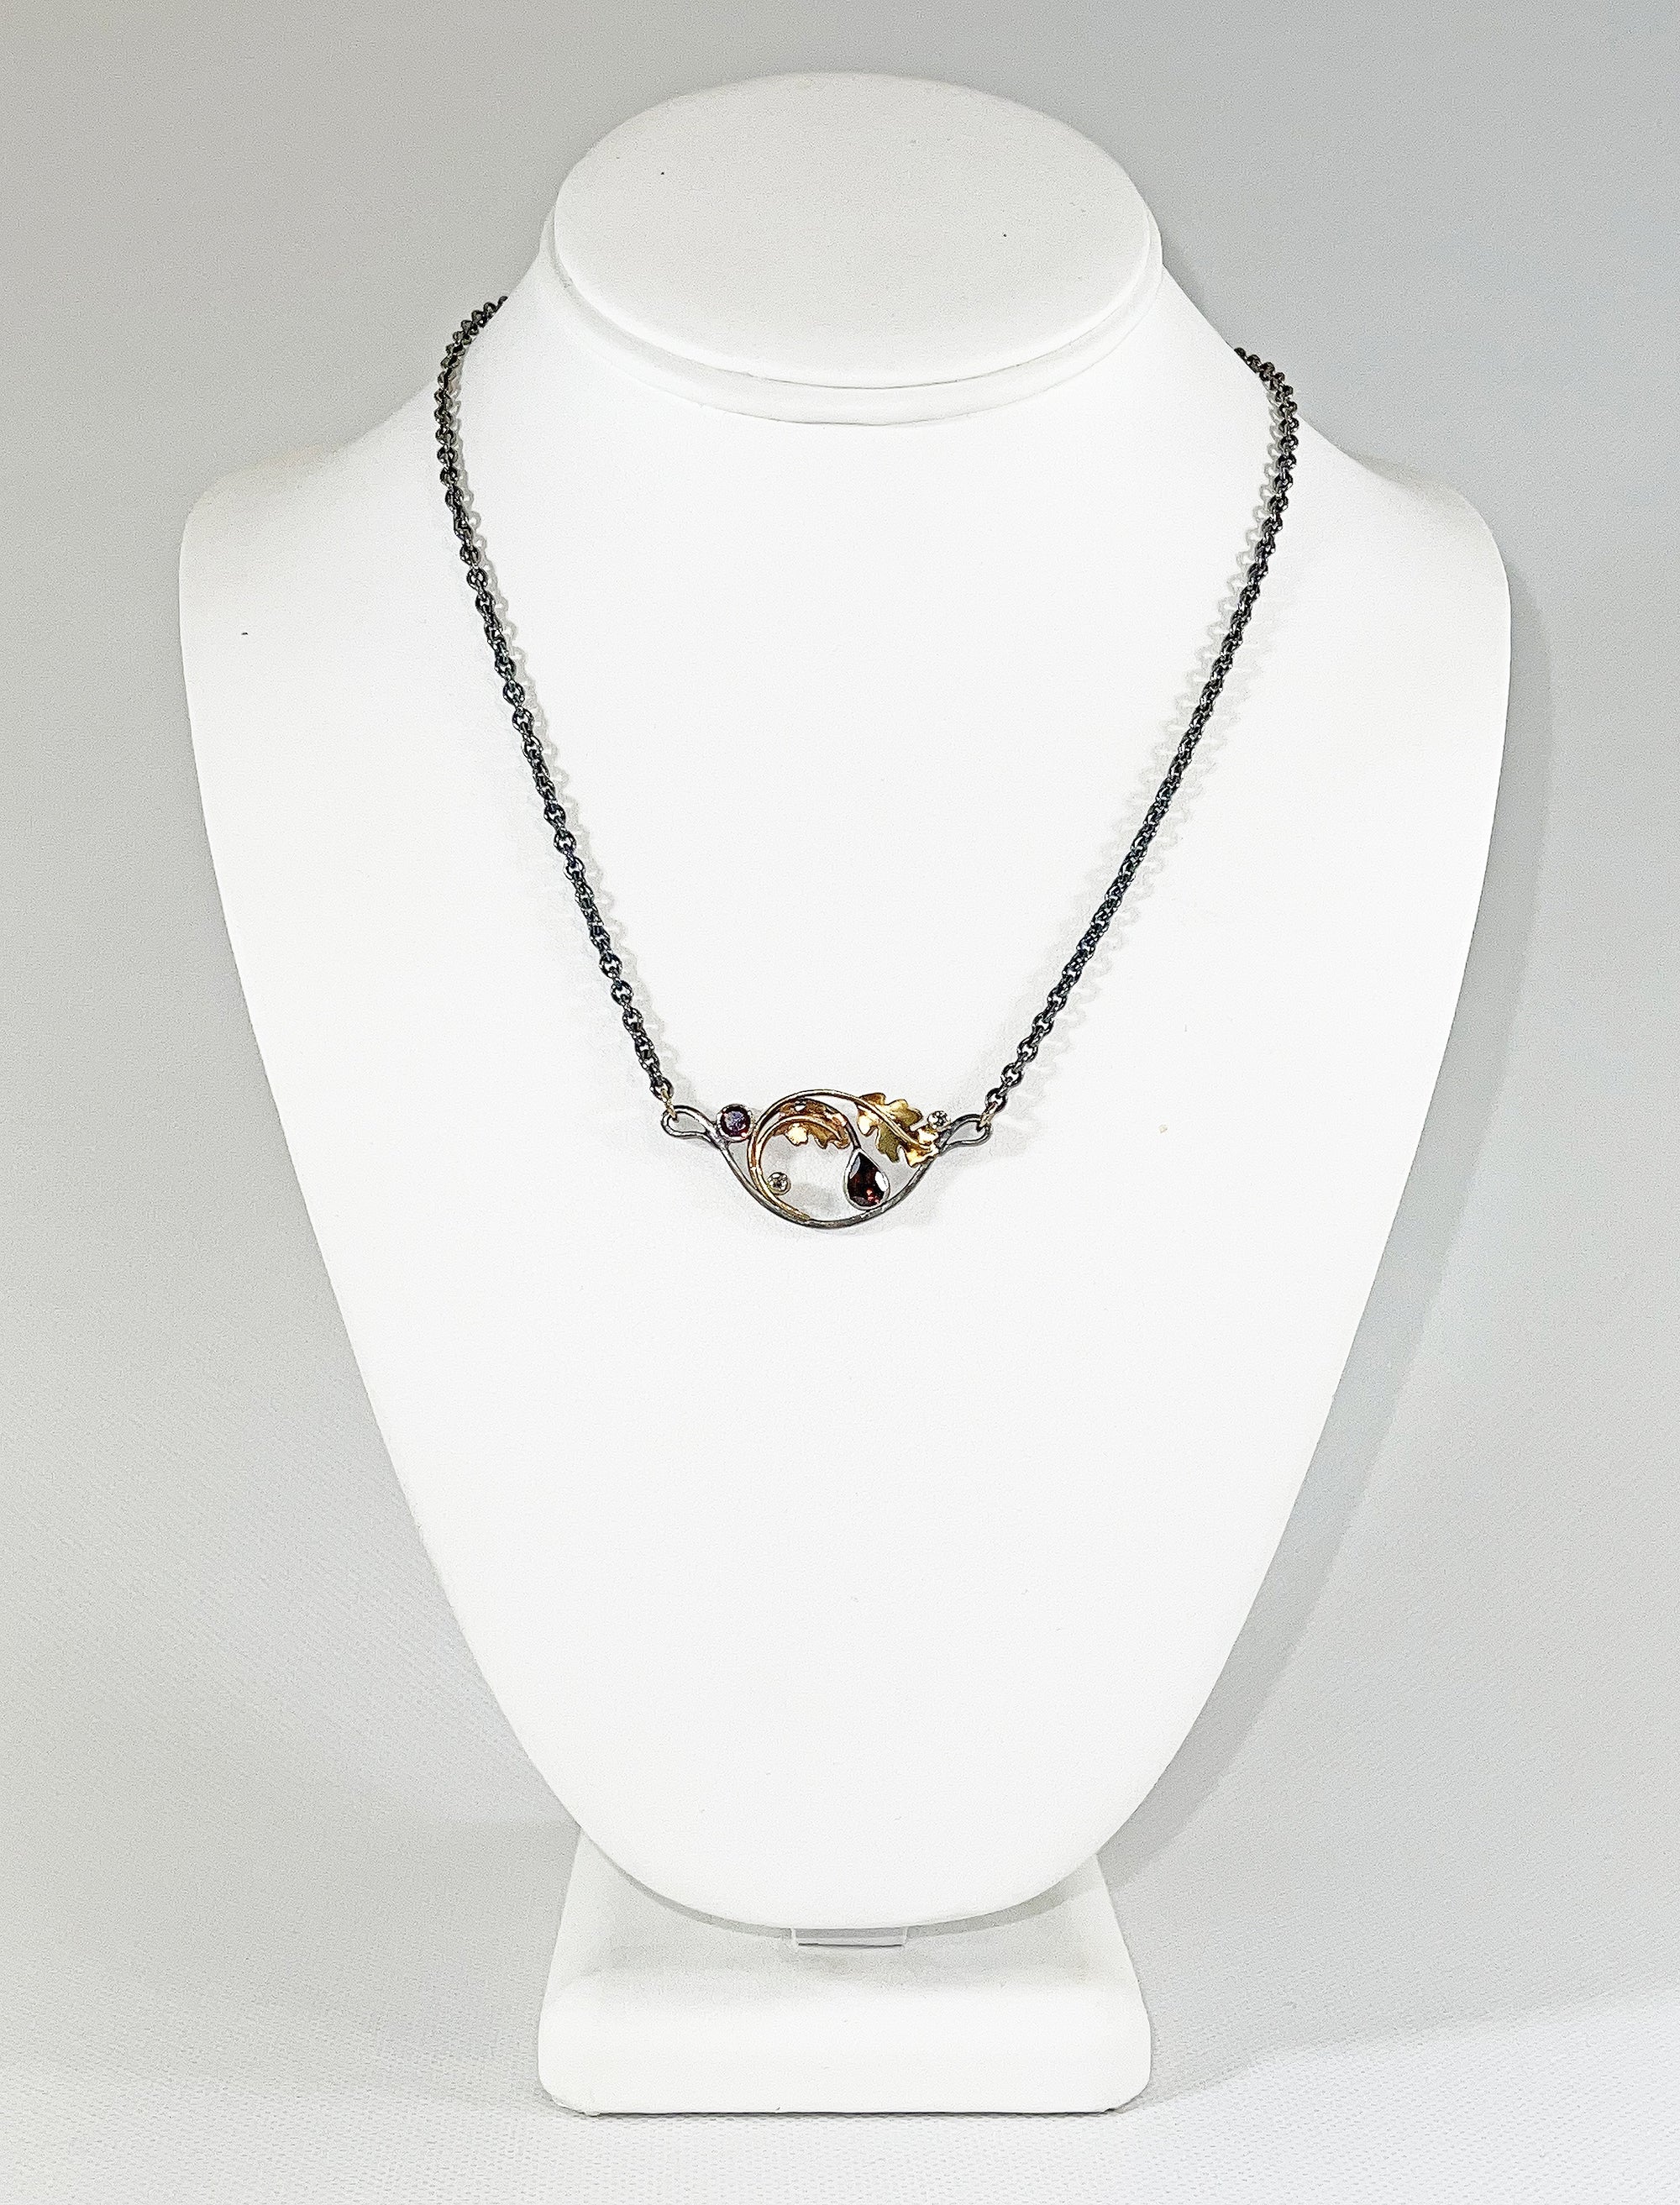 Brooke Barboza - Garnet with Diamonds and 14kt Gold Oak Leaves Necklace